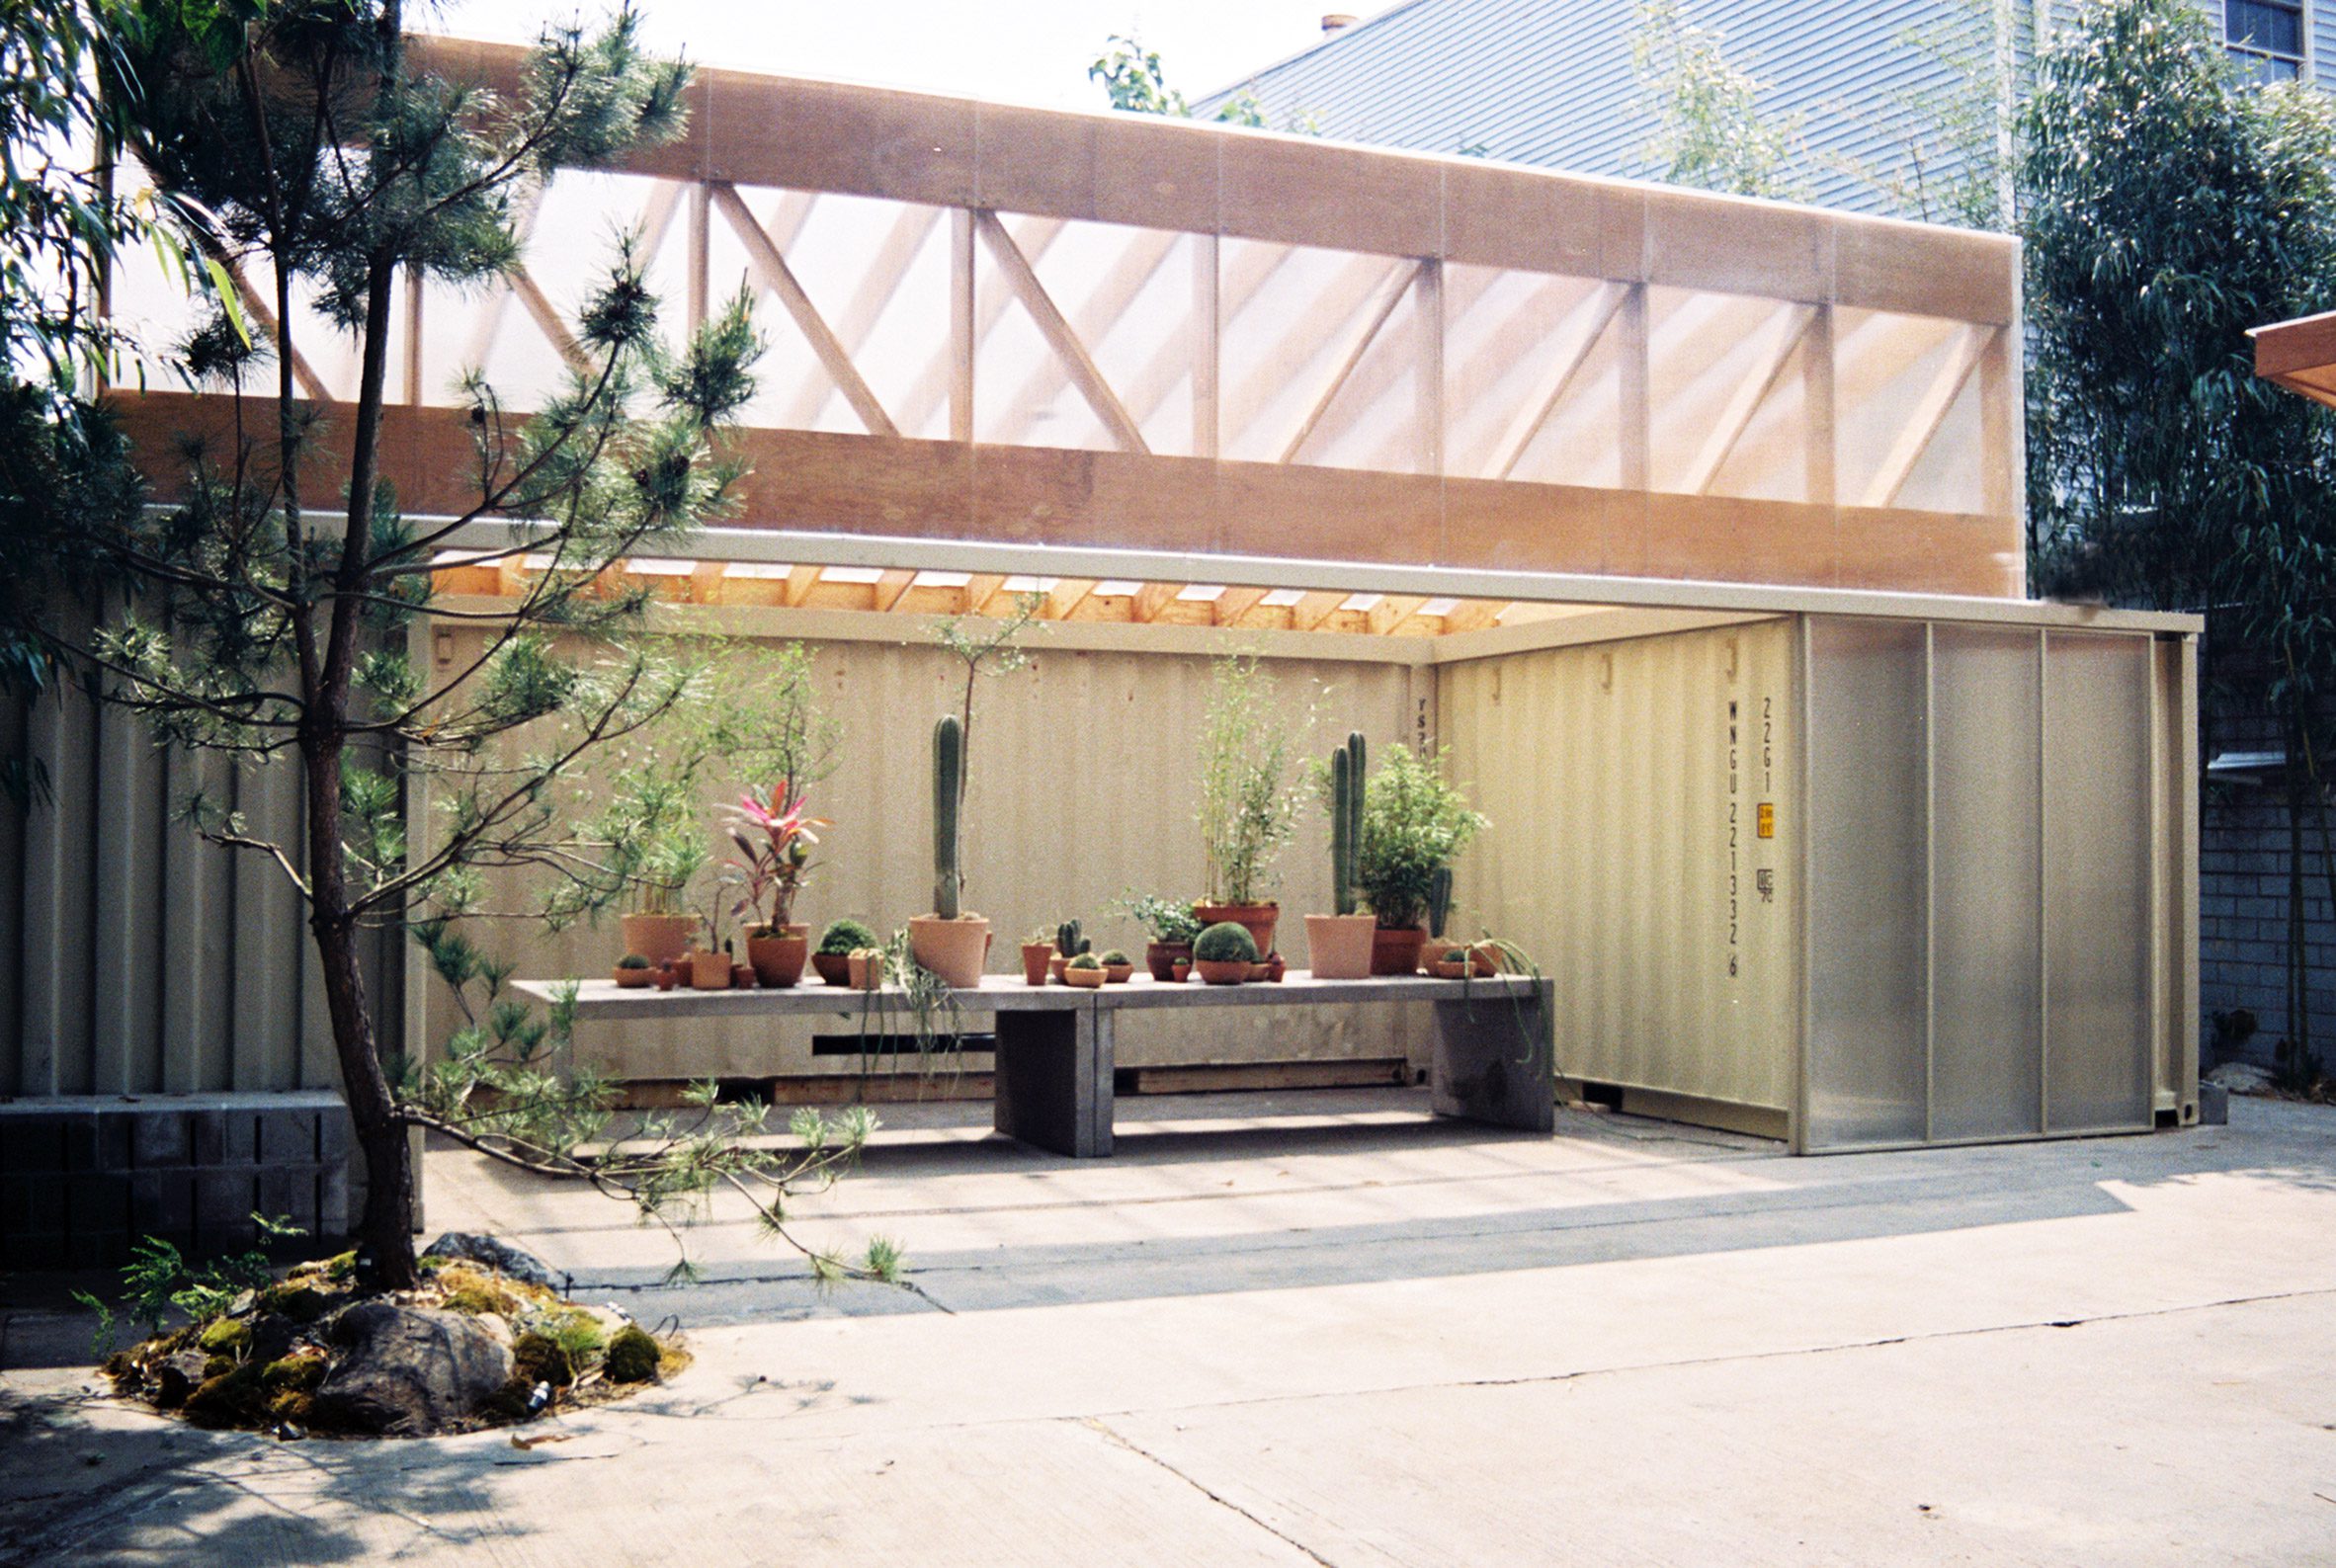 Greenhouse in storage units